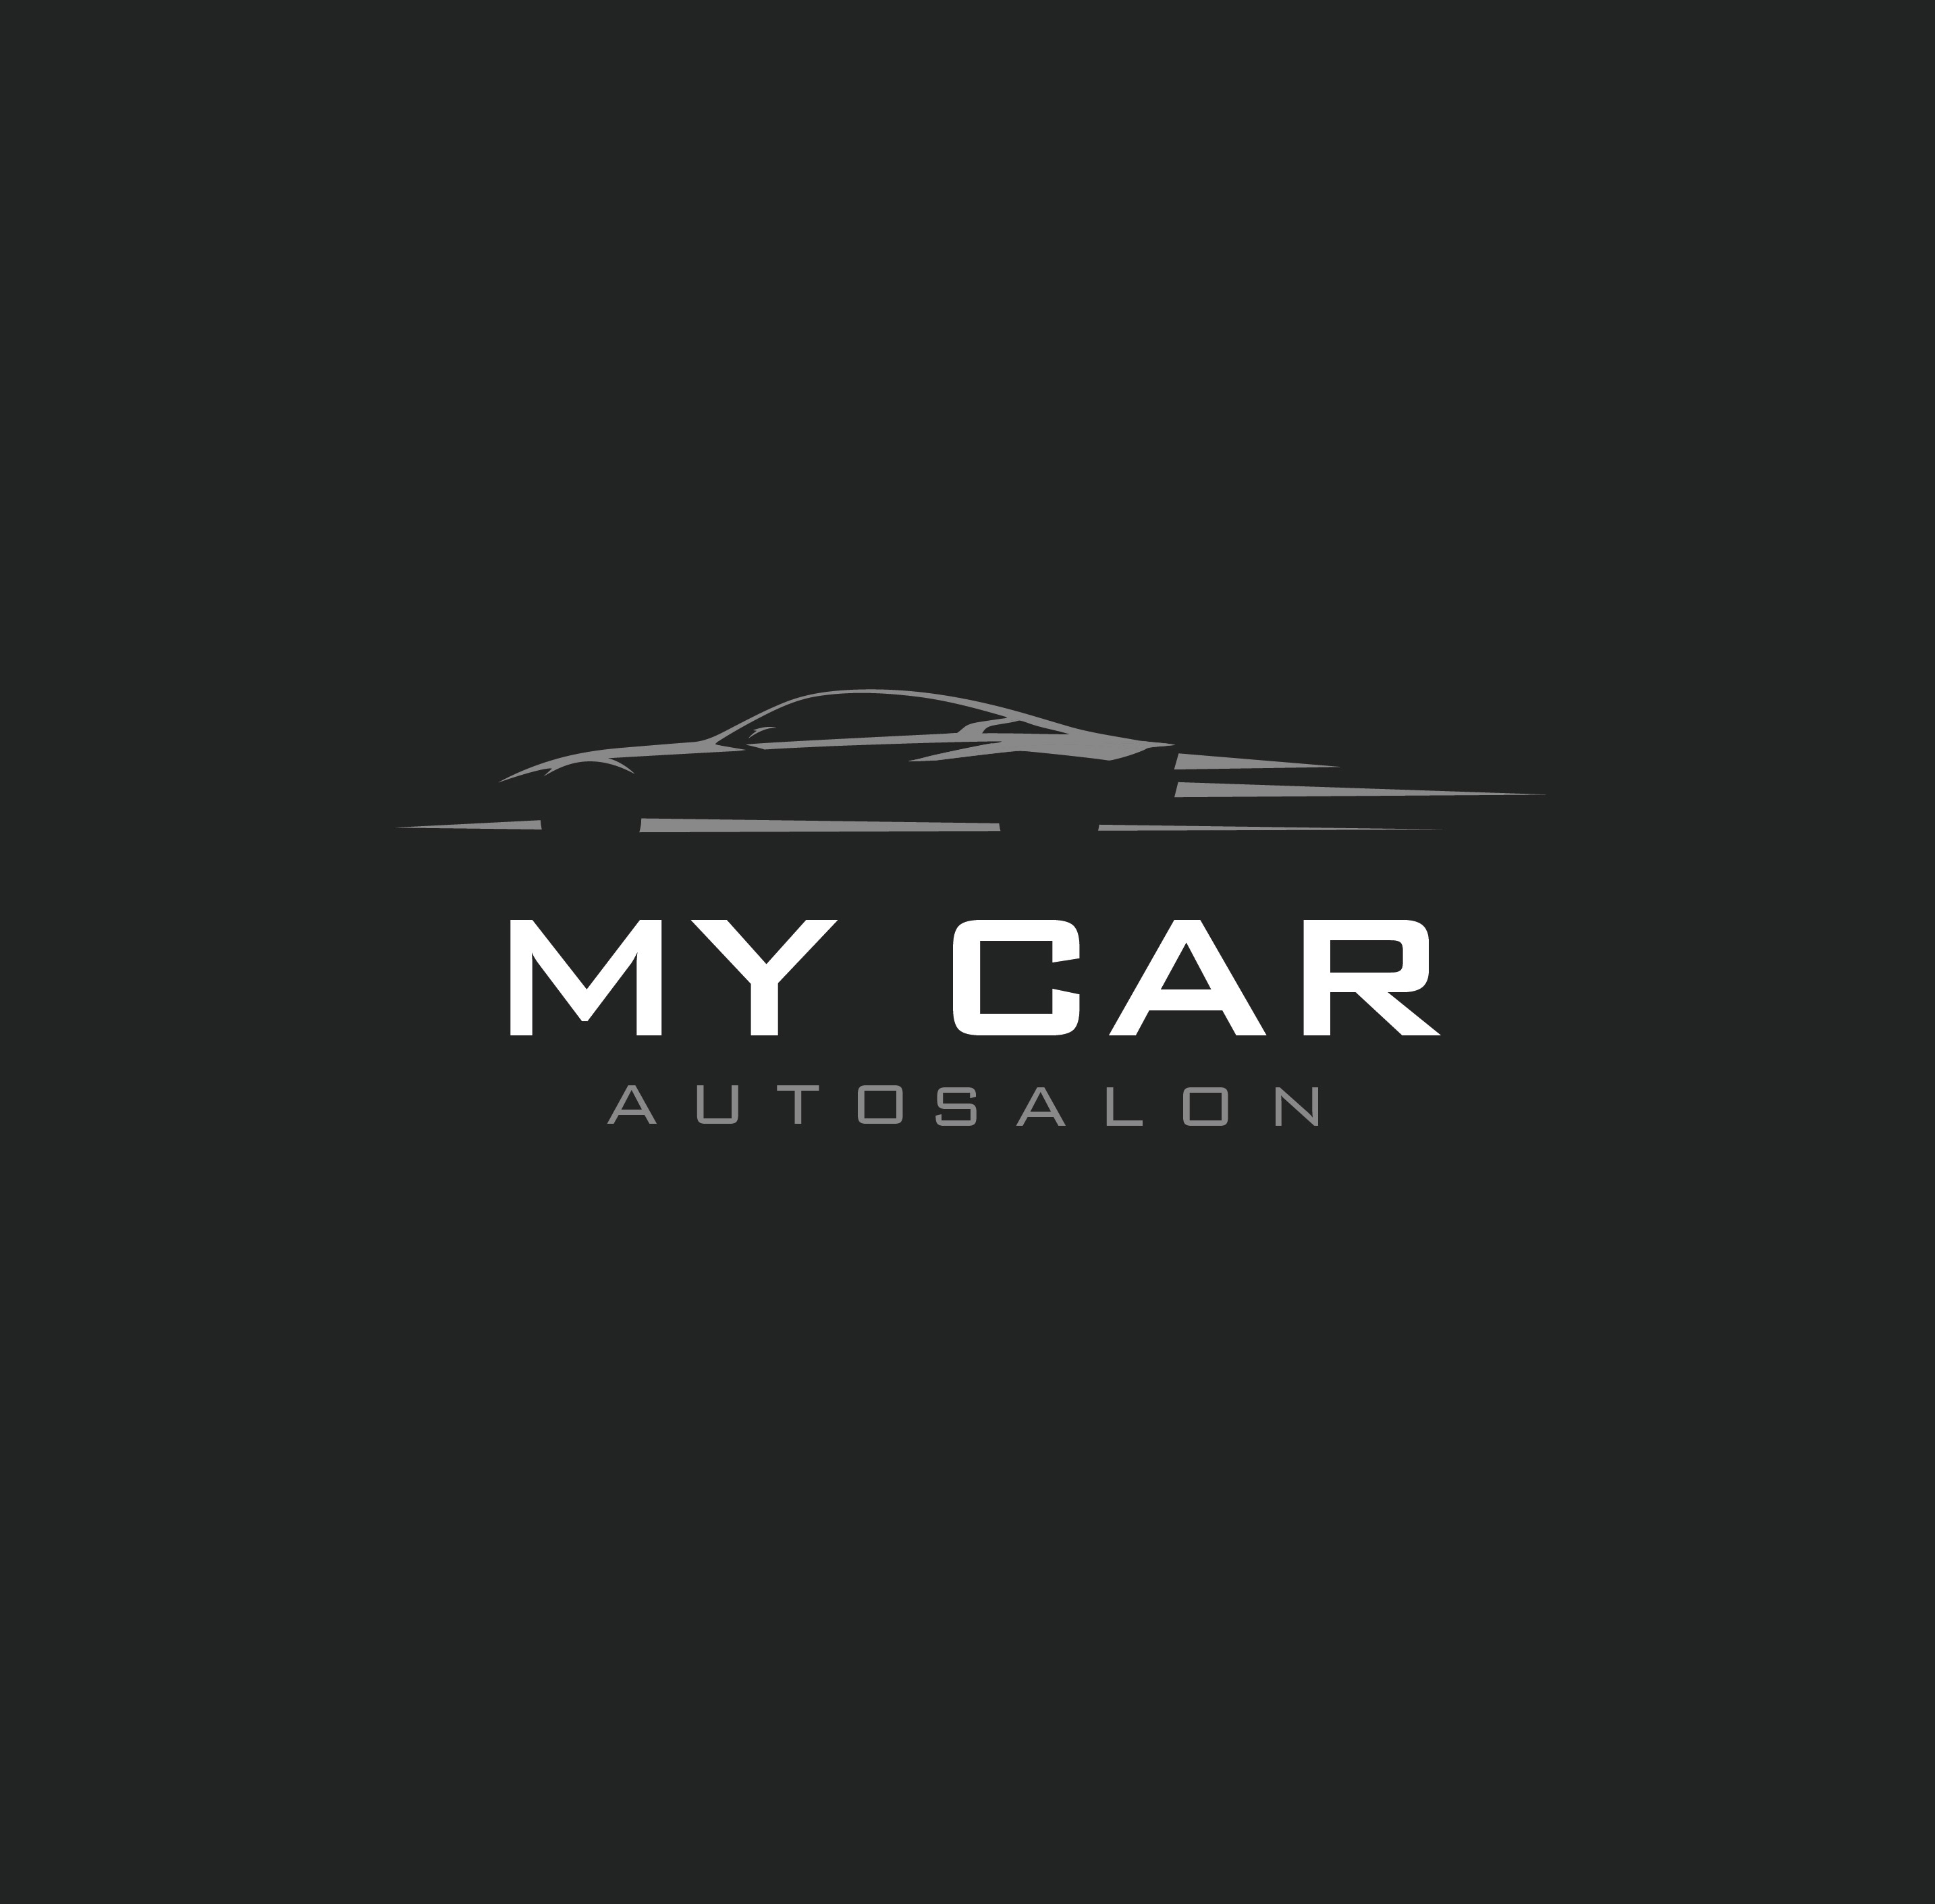 My car shop. Эмблема автосалона. Автосалон лого. Эмблемы автомобильных салонов. Разработка логотипа для автосалона.